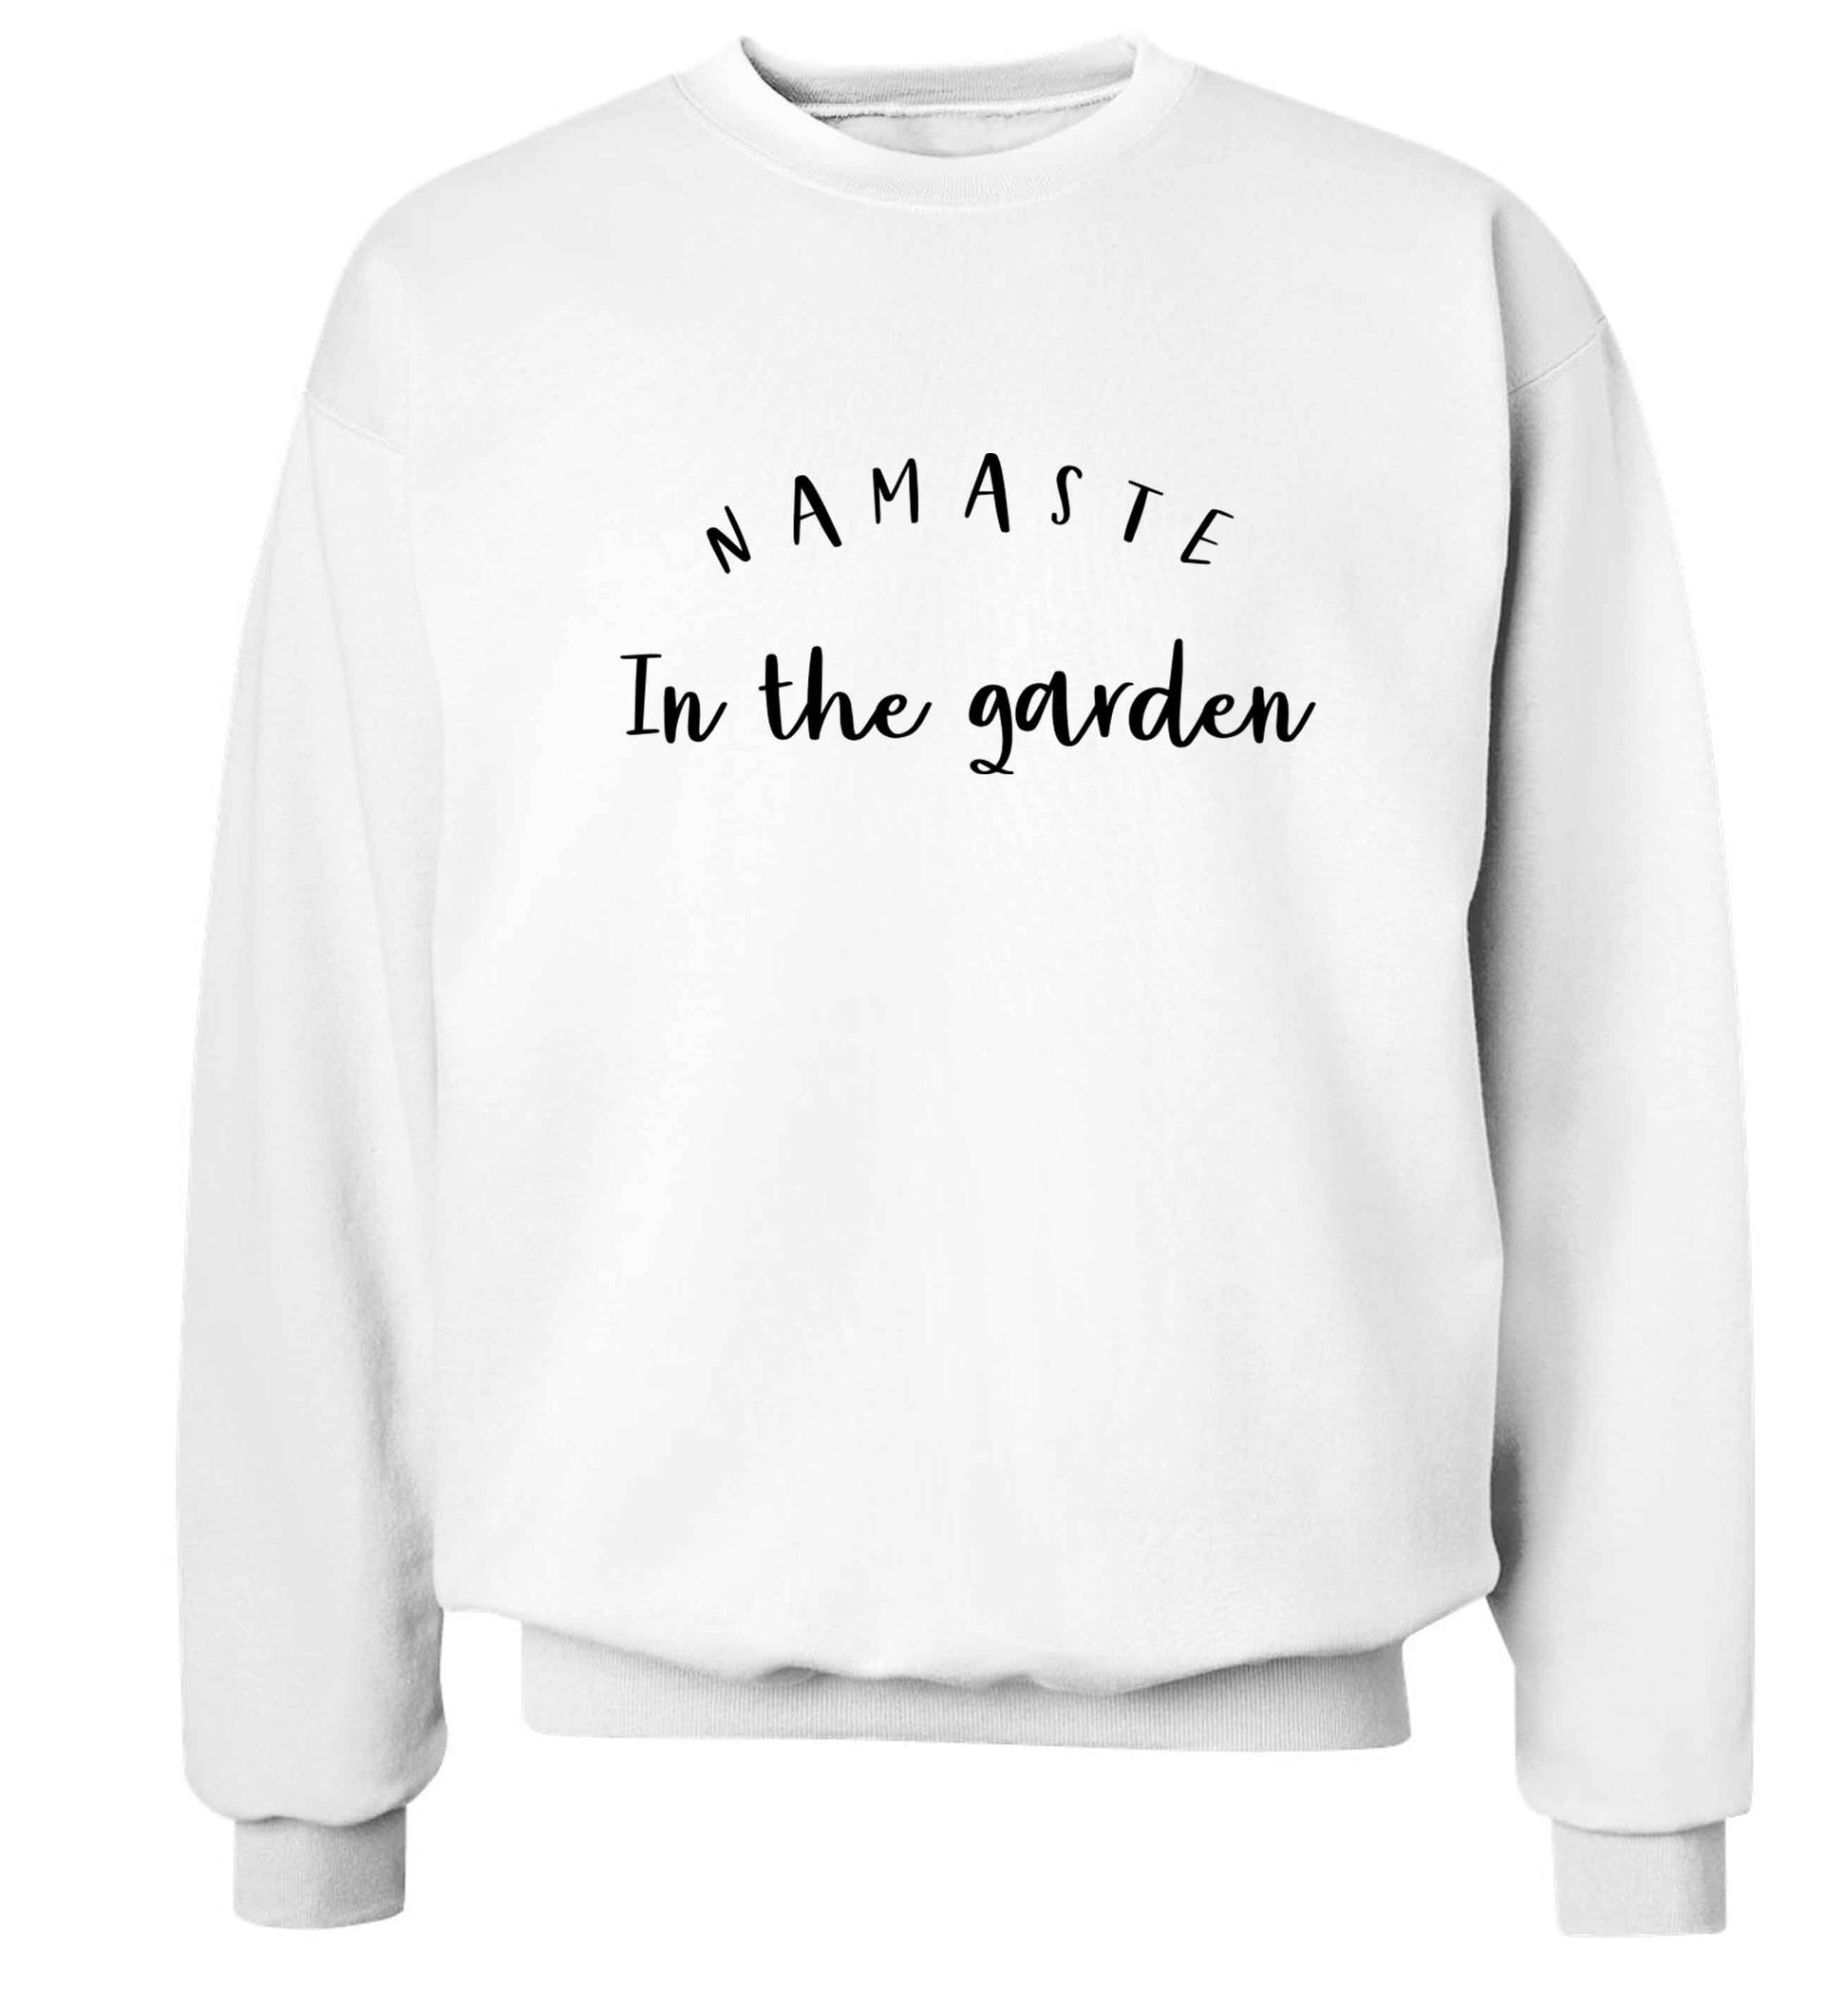 Namaste in the garden Adult's unisex white Sweater 2XL